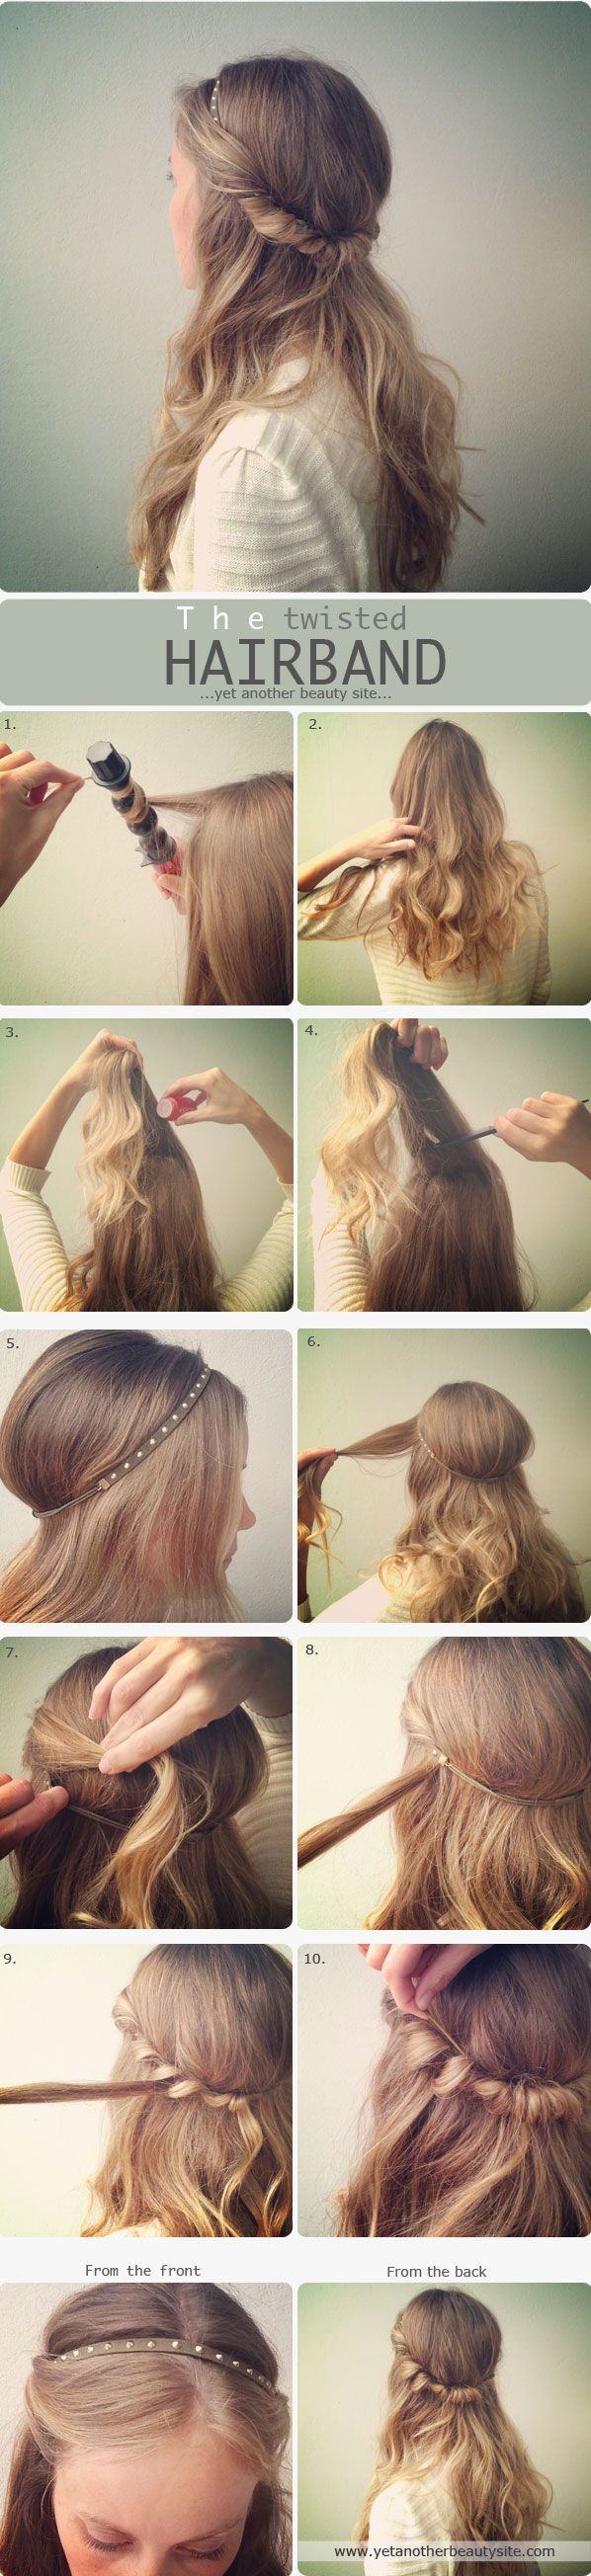 Styling hair around a headband.